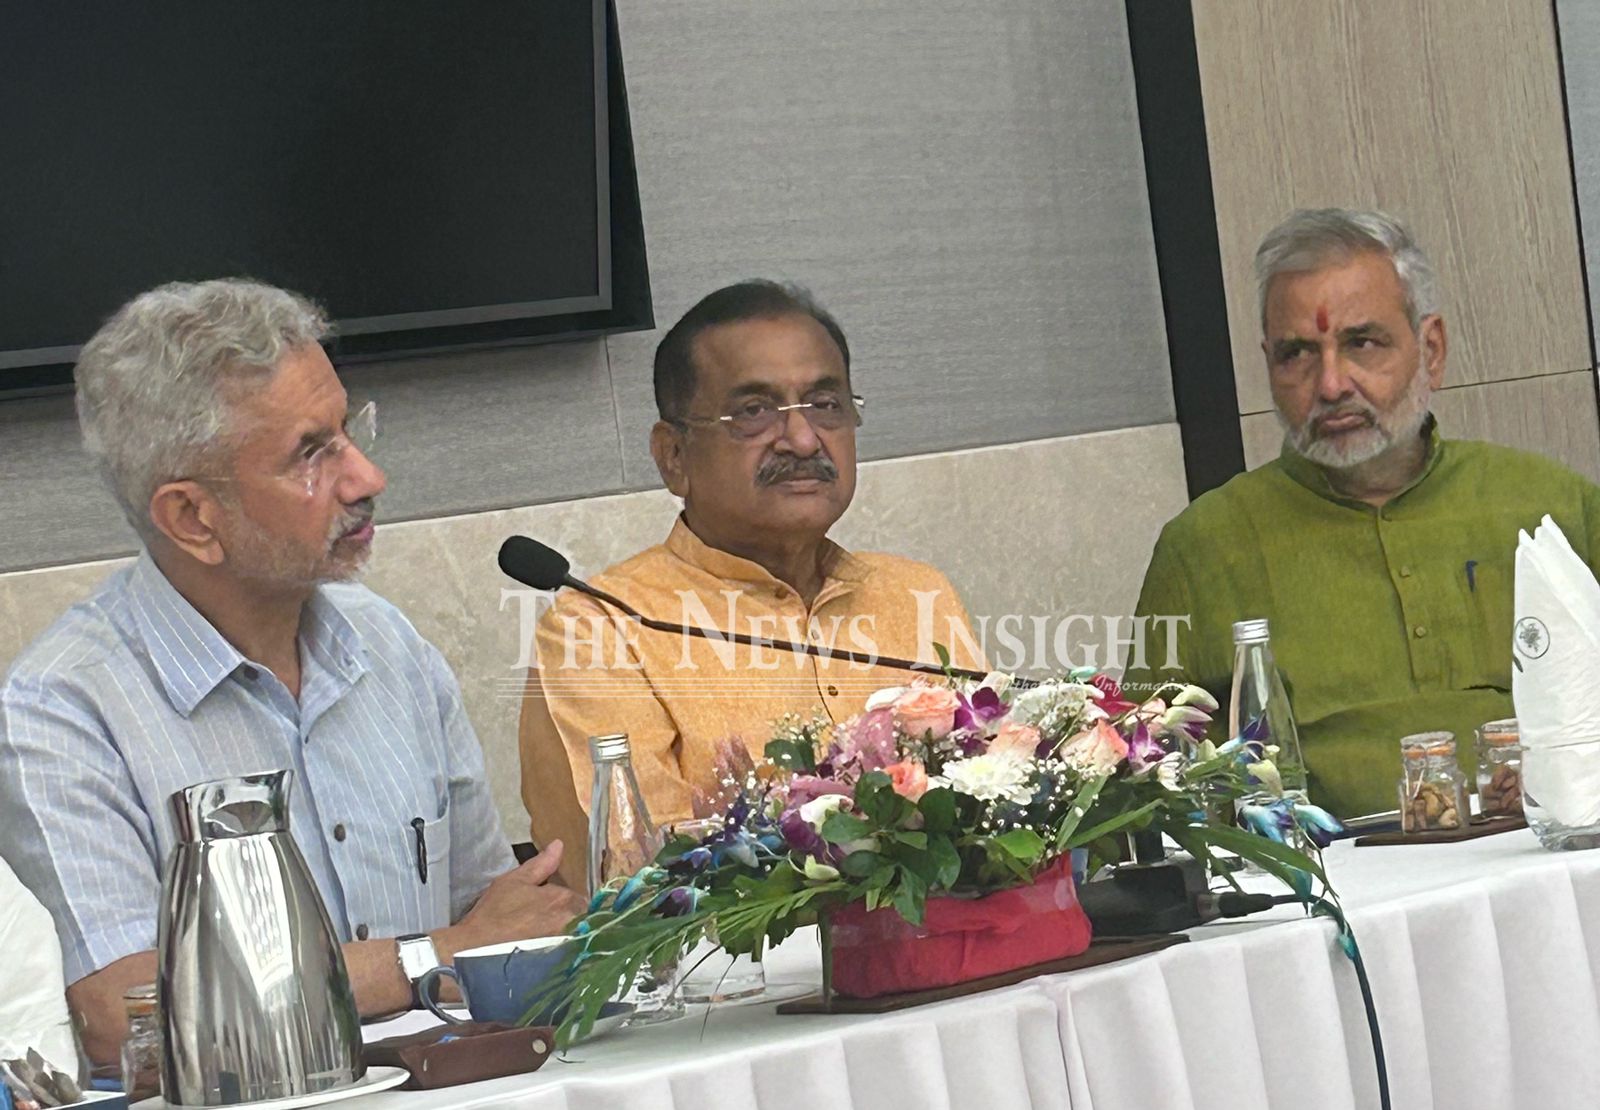 EAM S Jaishankar speaks on Foreign Relations & Diplomacy at Editors’ Meet